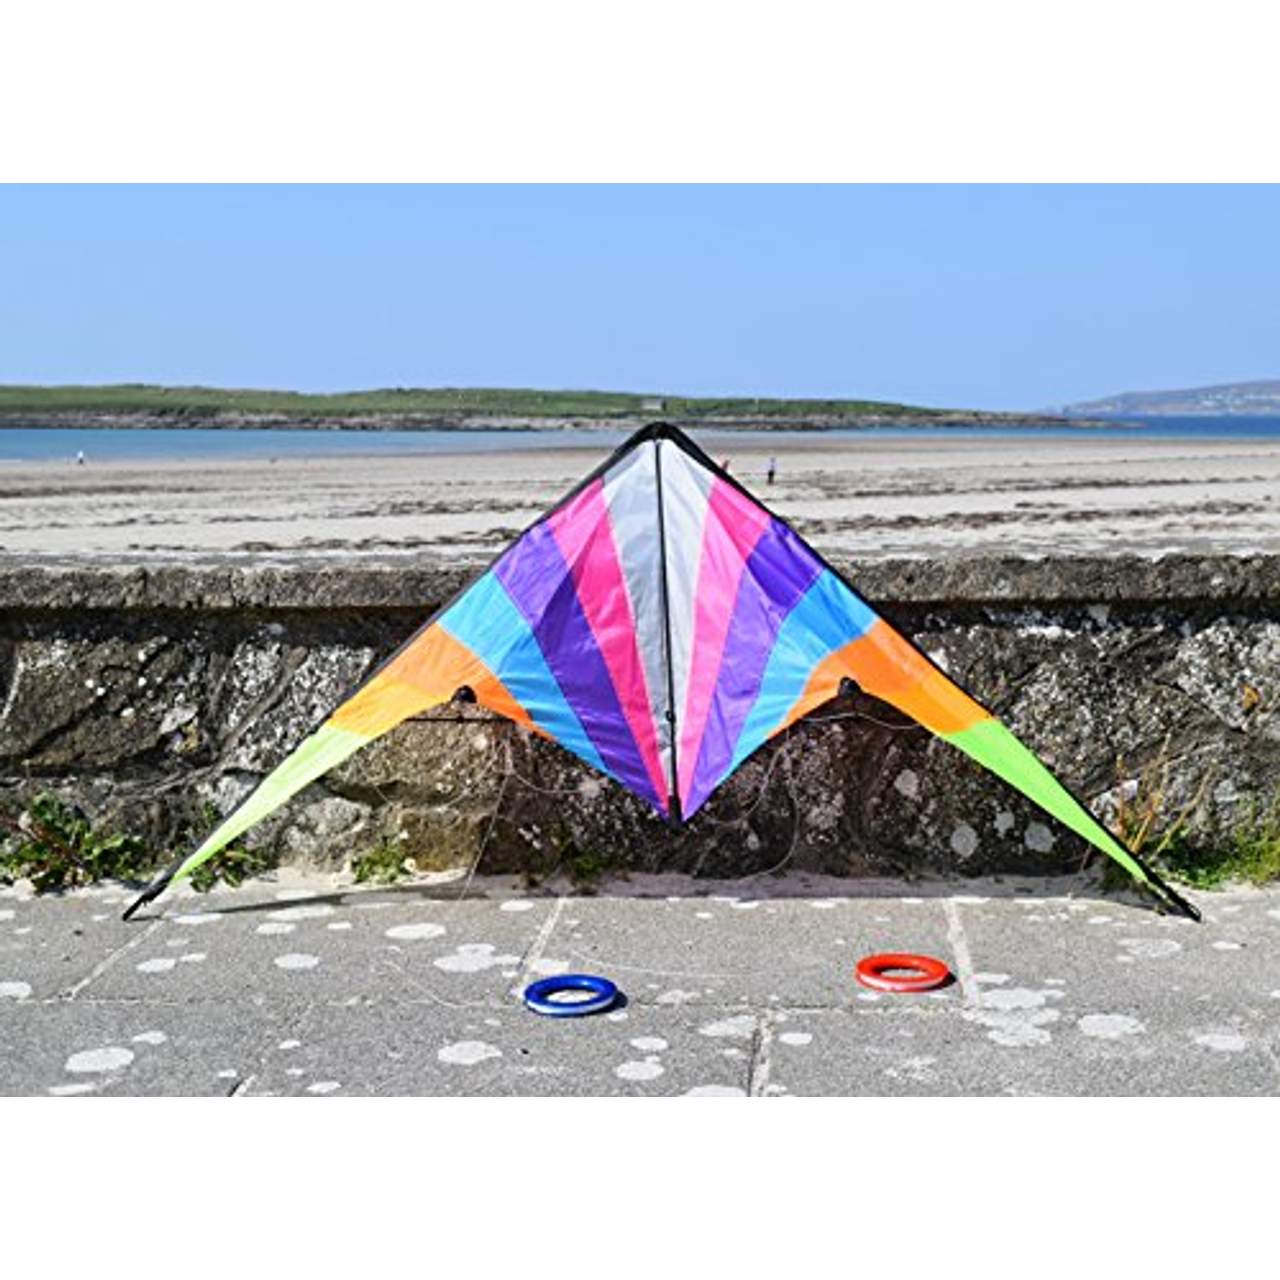 Stunt Kite 160 x 80 cm Dual Line Kite